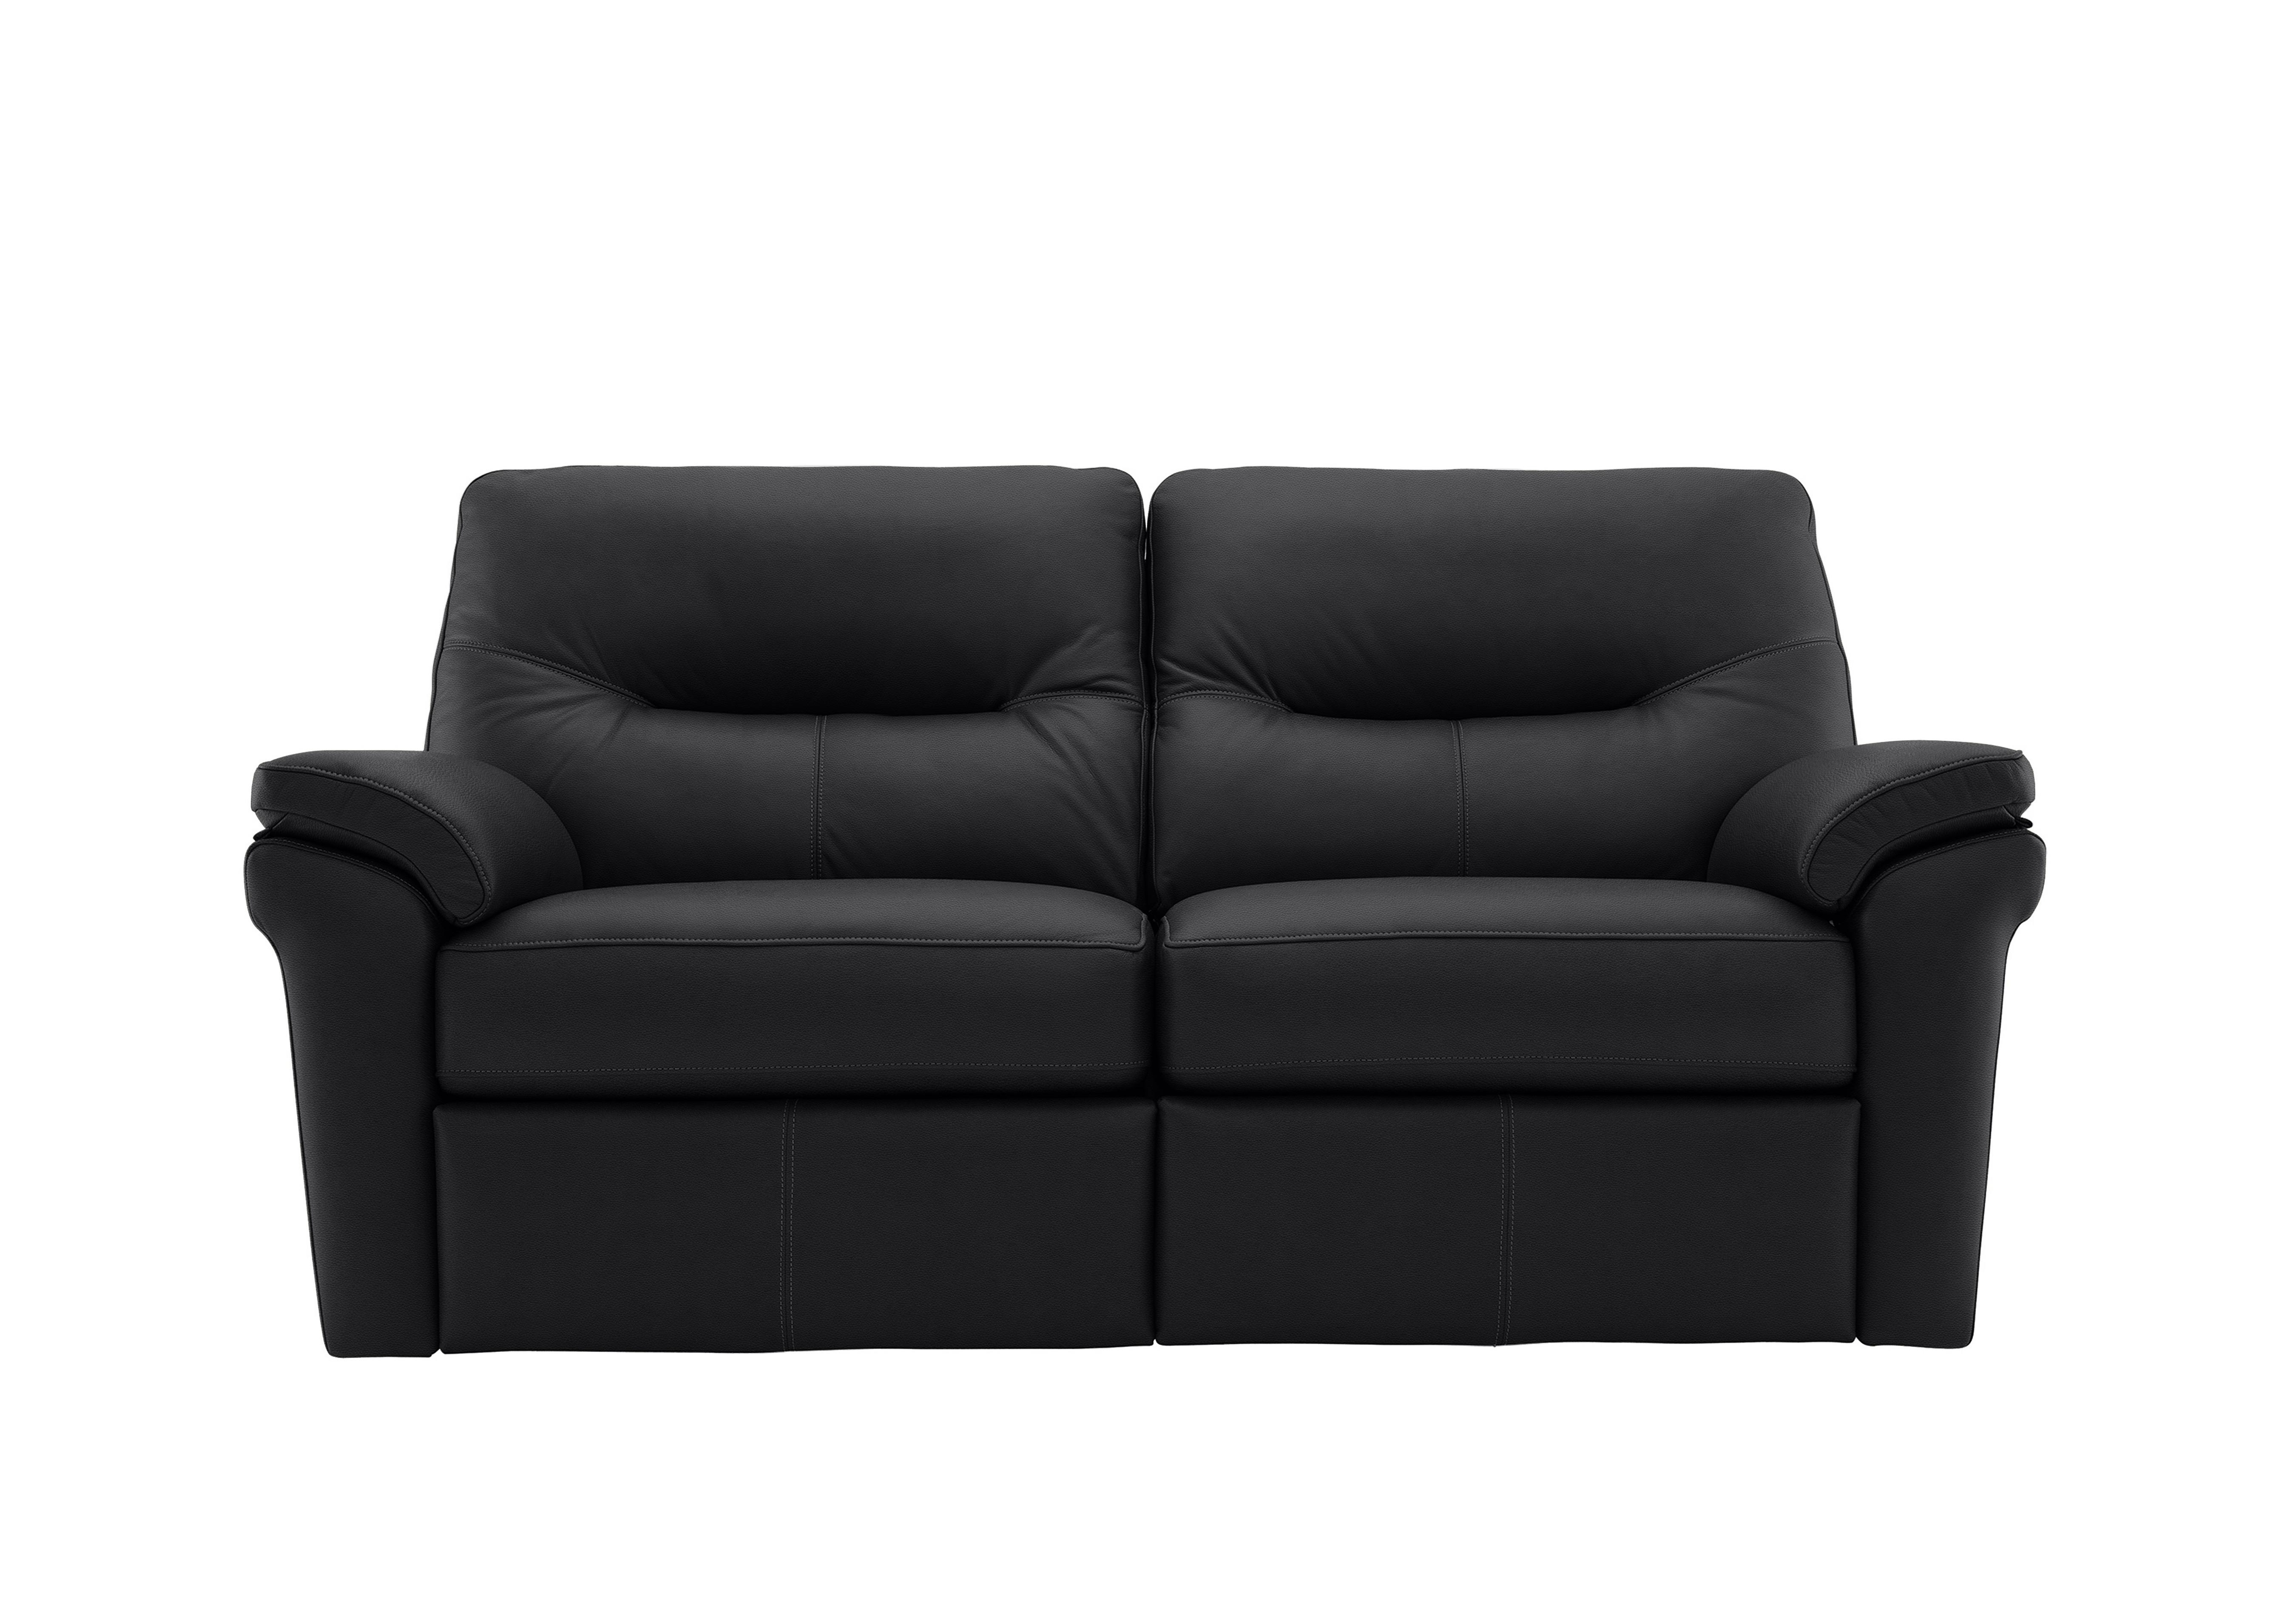 Seattle 2.5 Seater Leather Sofa in L854 Cambridge Black on Furniture Village